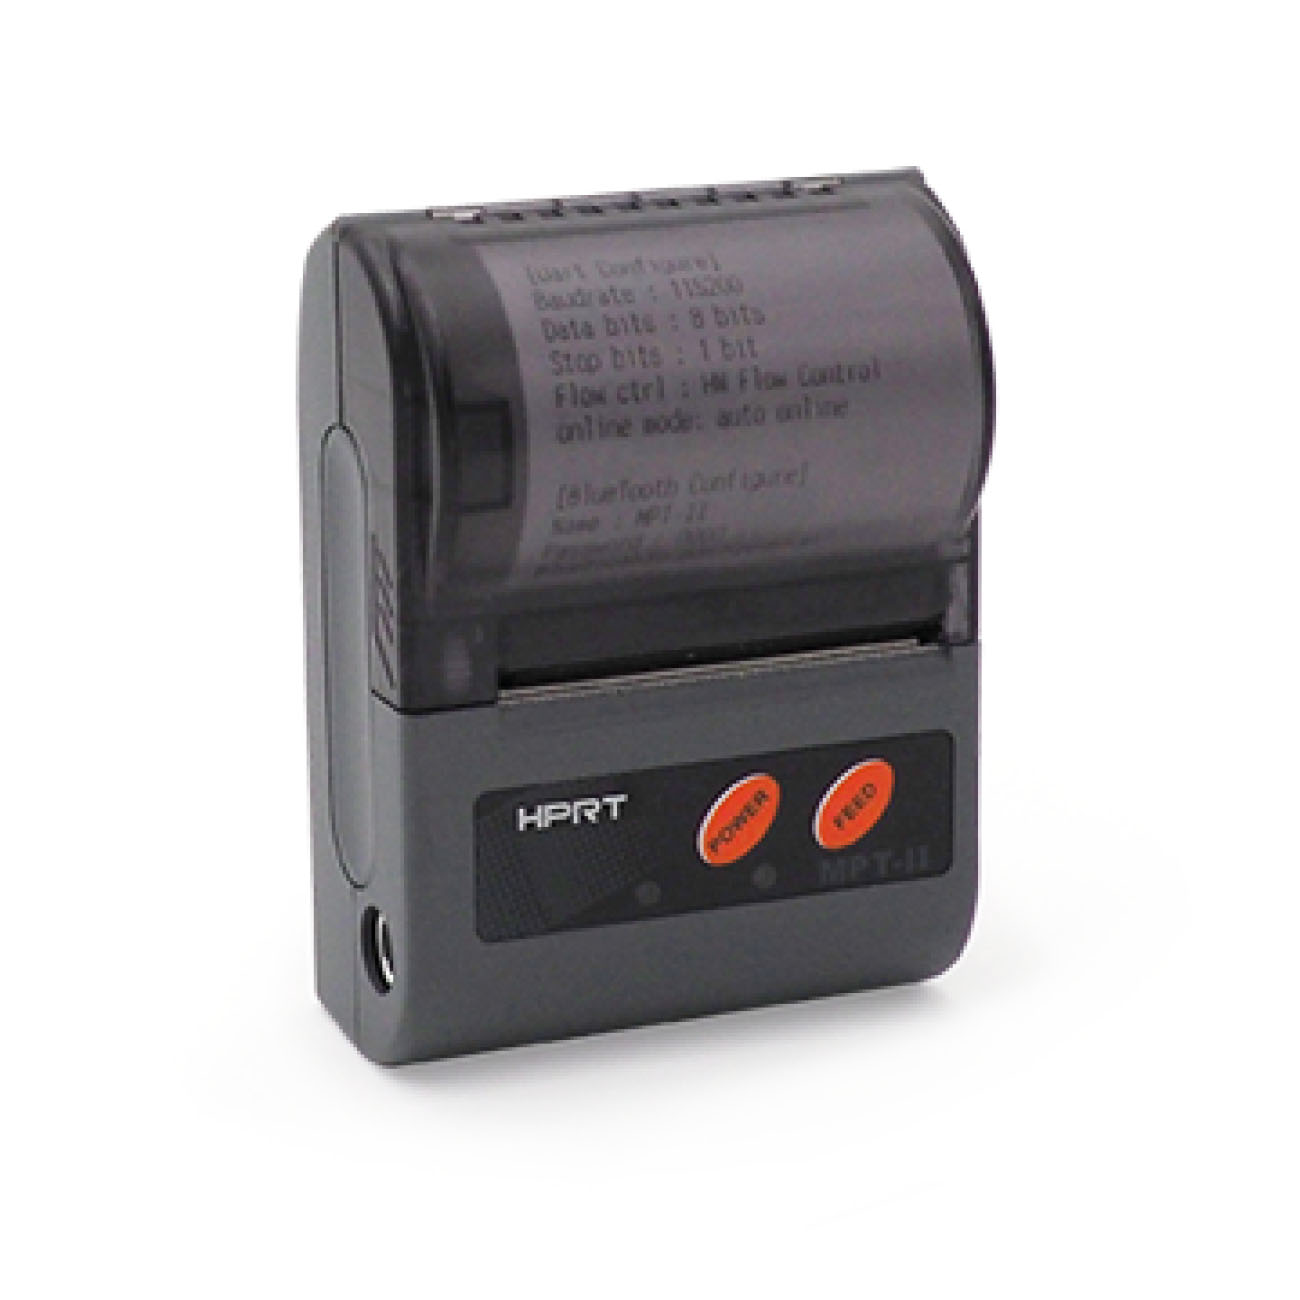 HPRT Wireless Bluetooth Receipt Thermal Printer